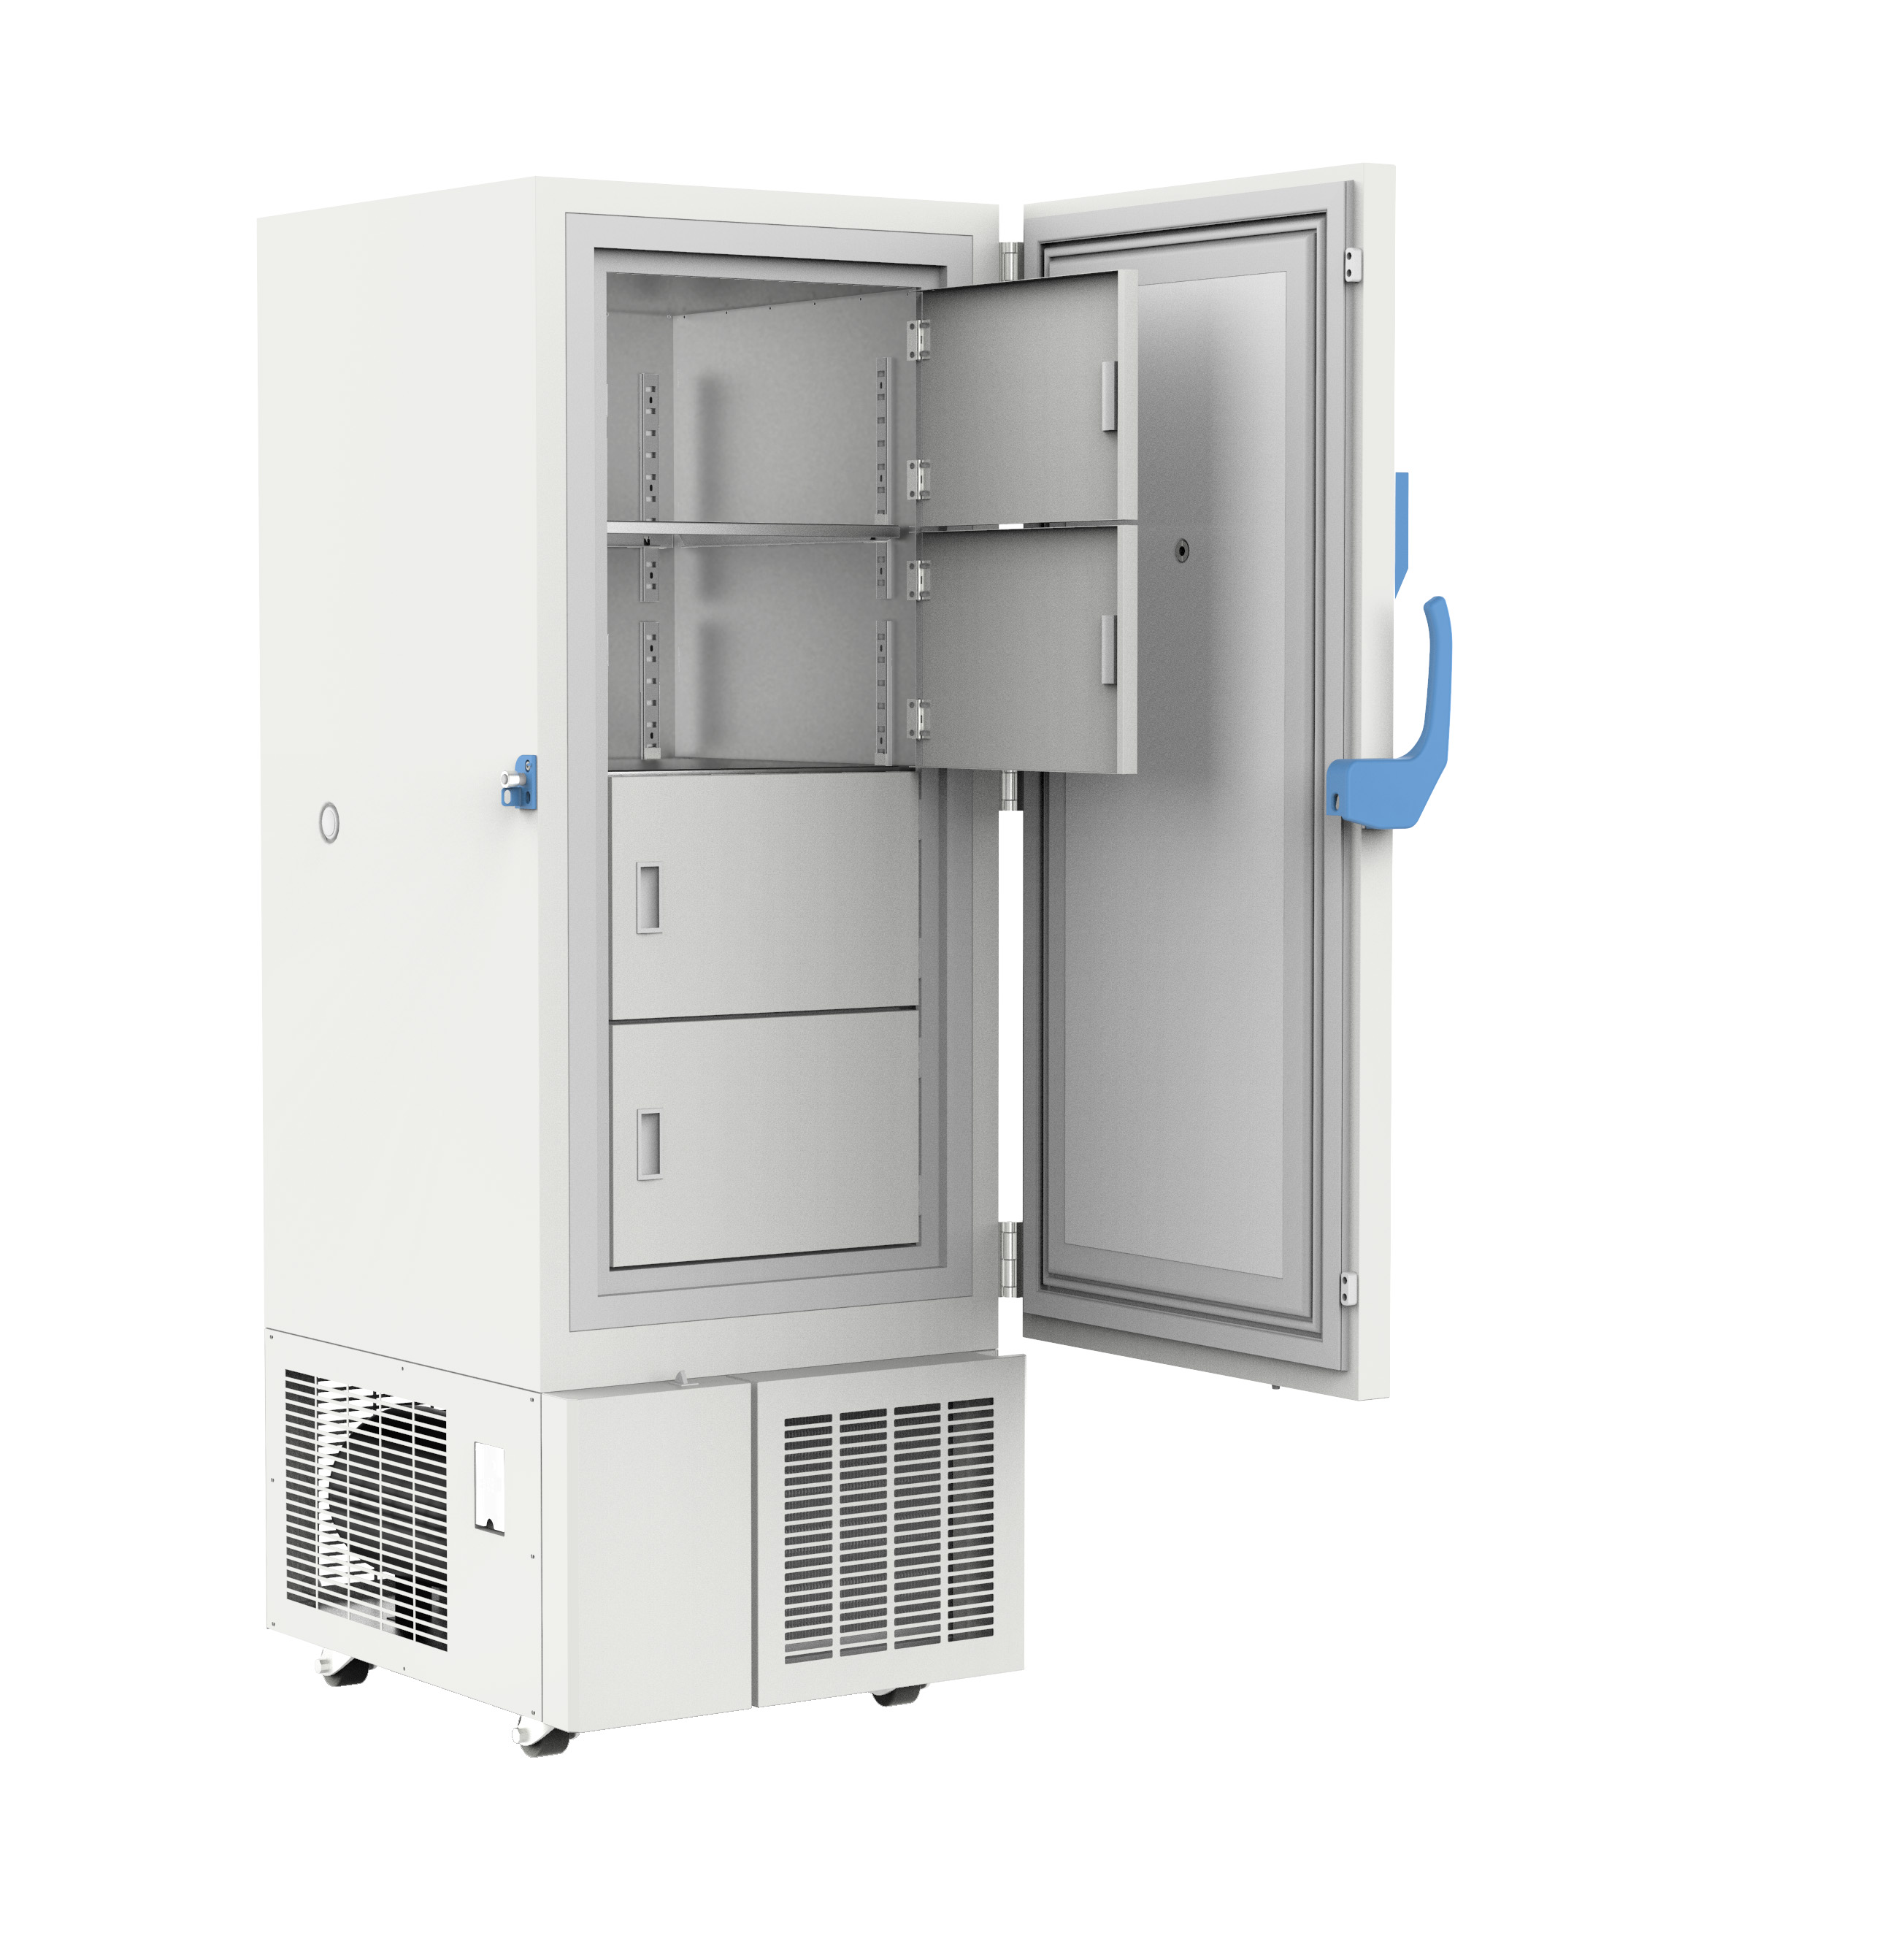 MS-UE340 -86℃ Biomedical Ultra-low Temperature Freezer